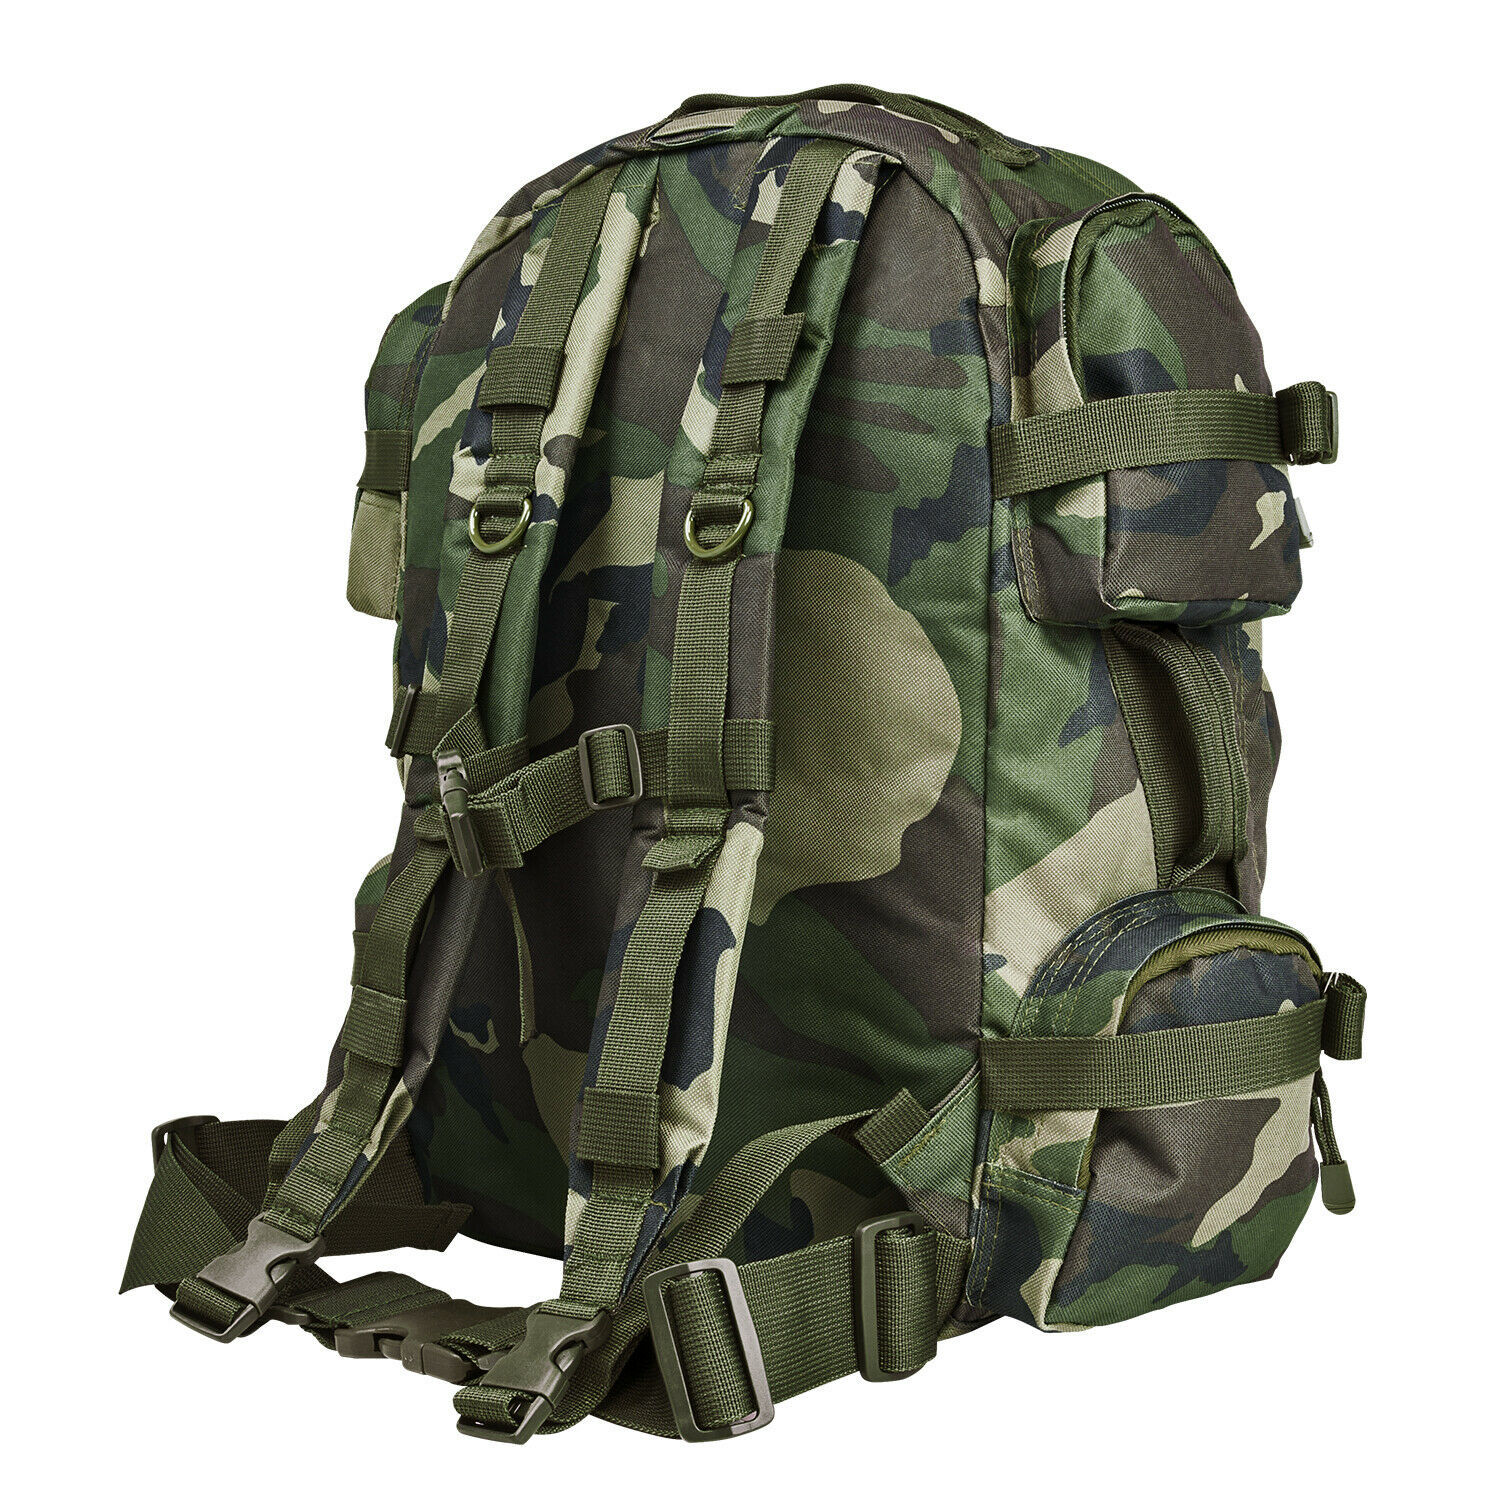 NEW Vism NcStar MOLLE Tactical Hunting Camping Hiking Backpack WOODLAND ...